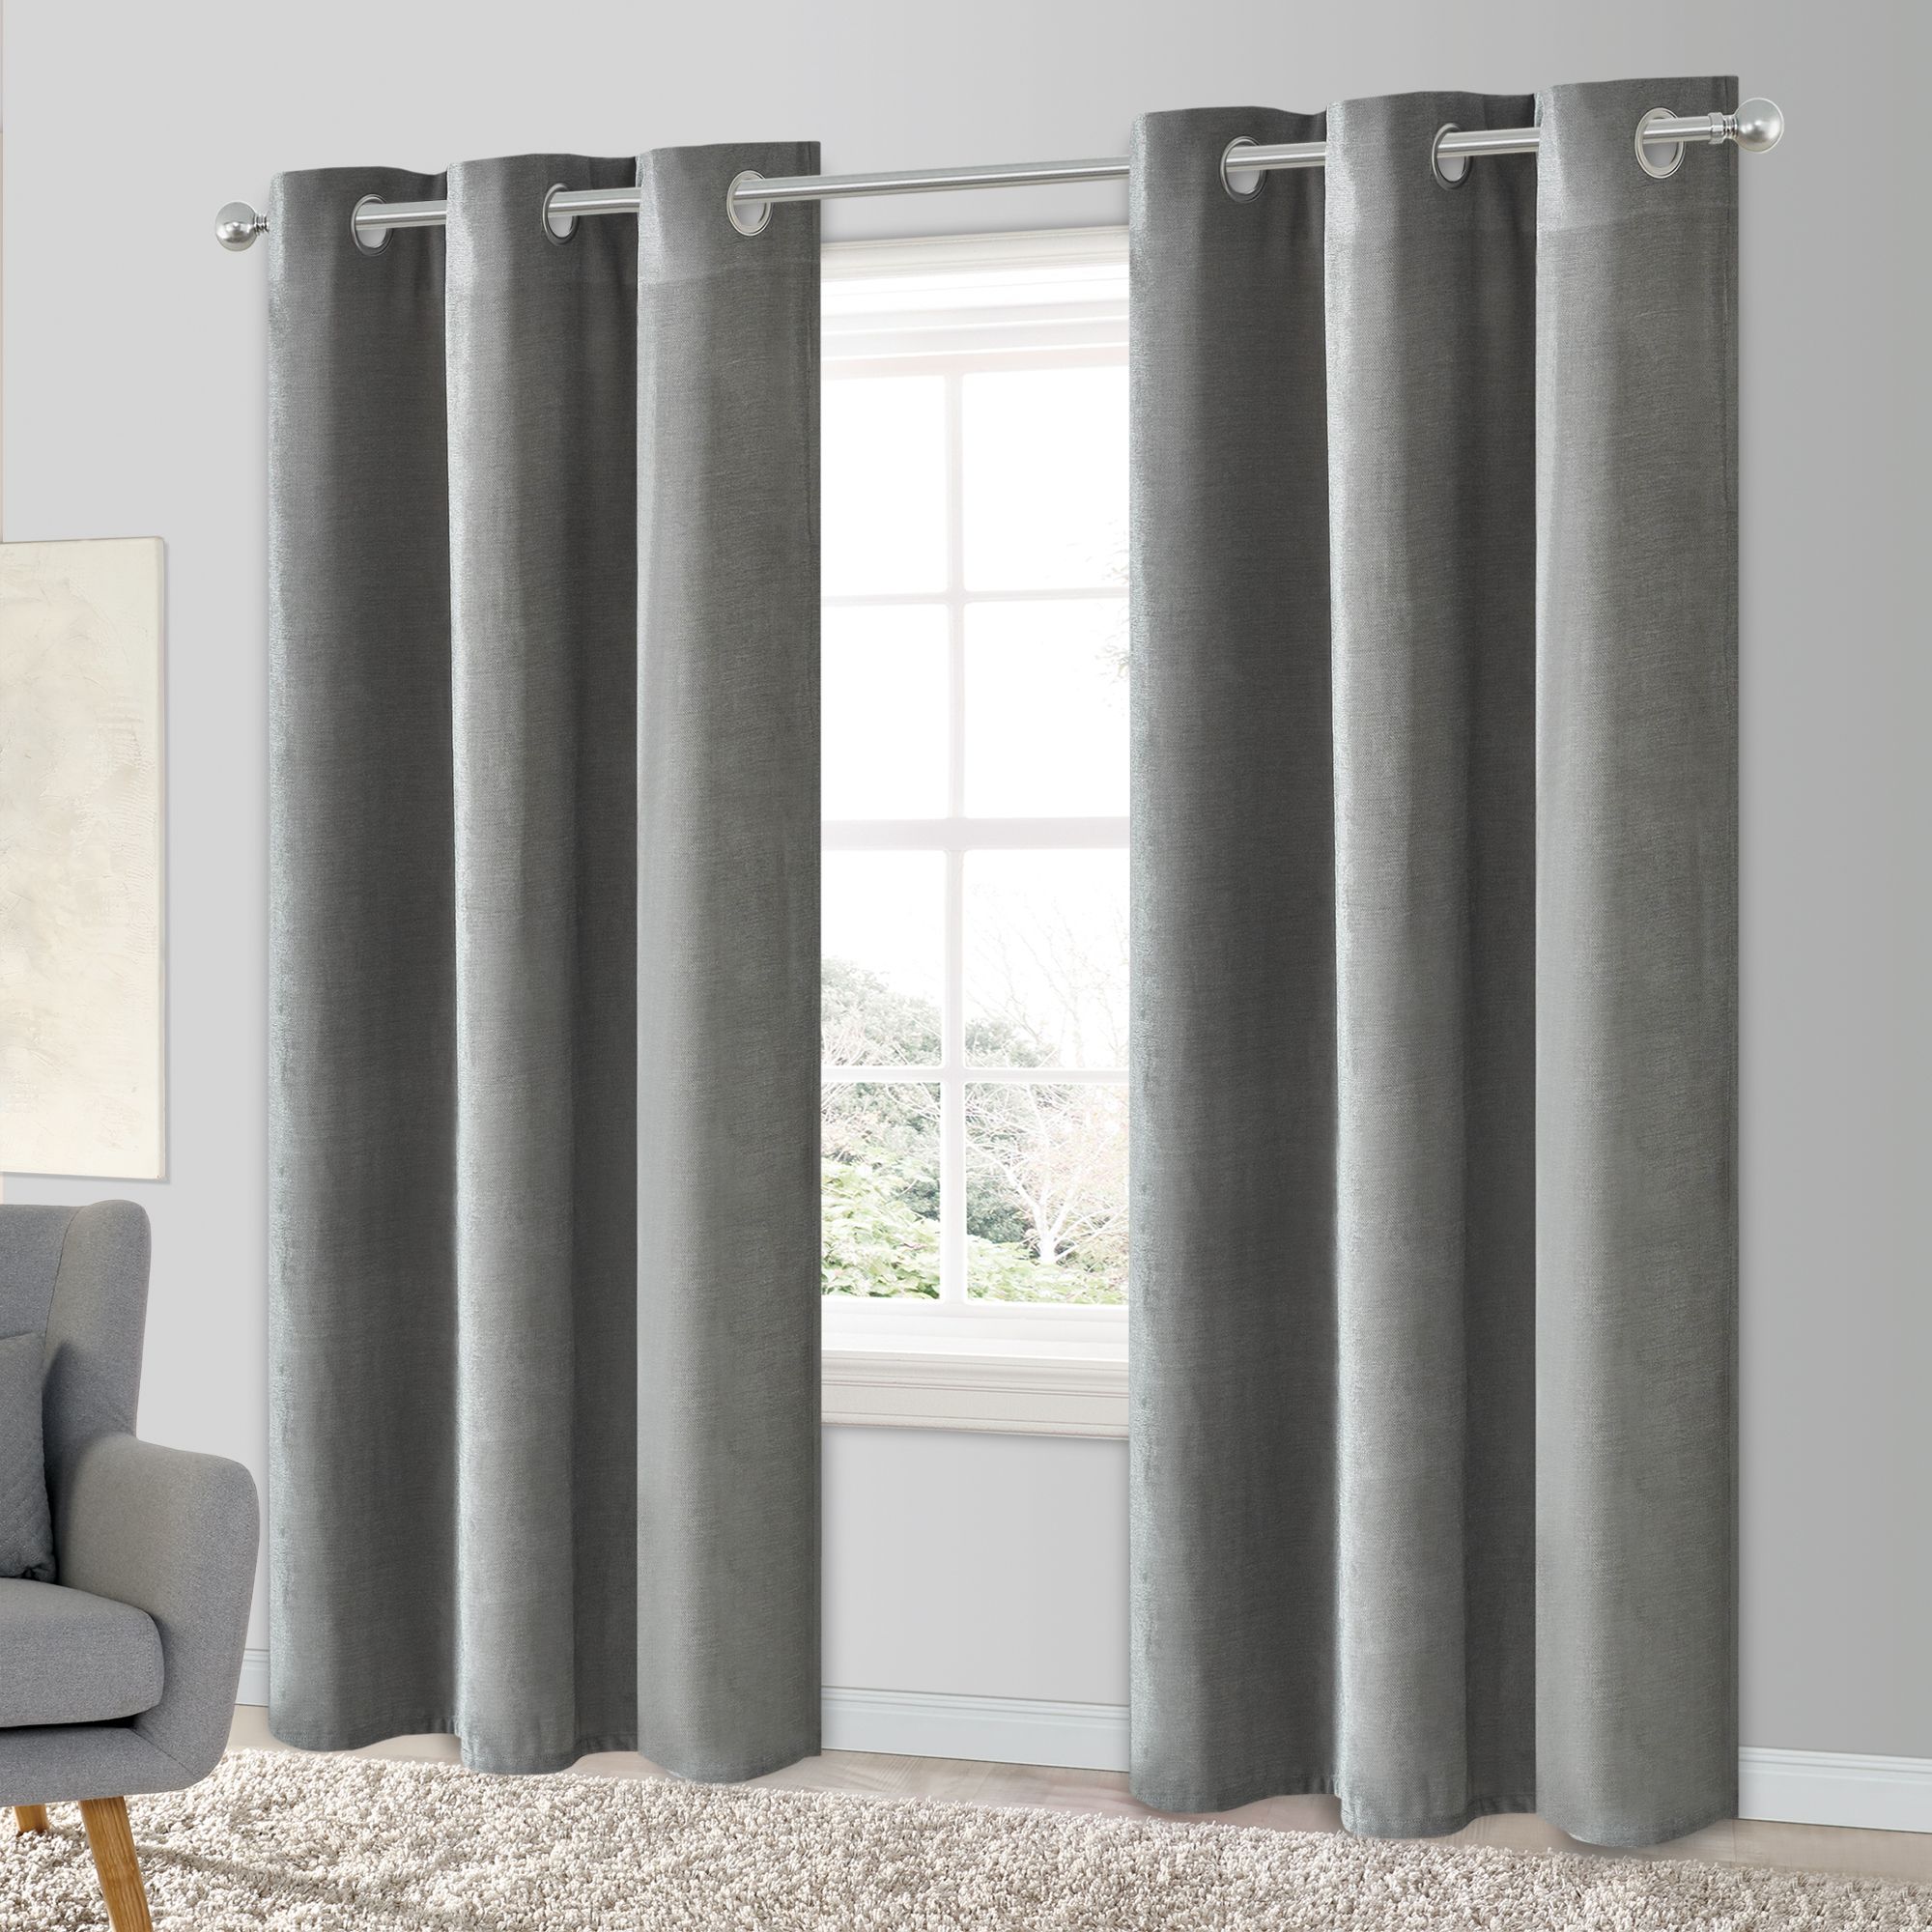 Arntzen Grey Plain woven Lined Eyelet Curtain (W)117cm (L)137cm, Pair